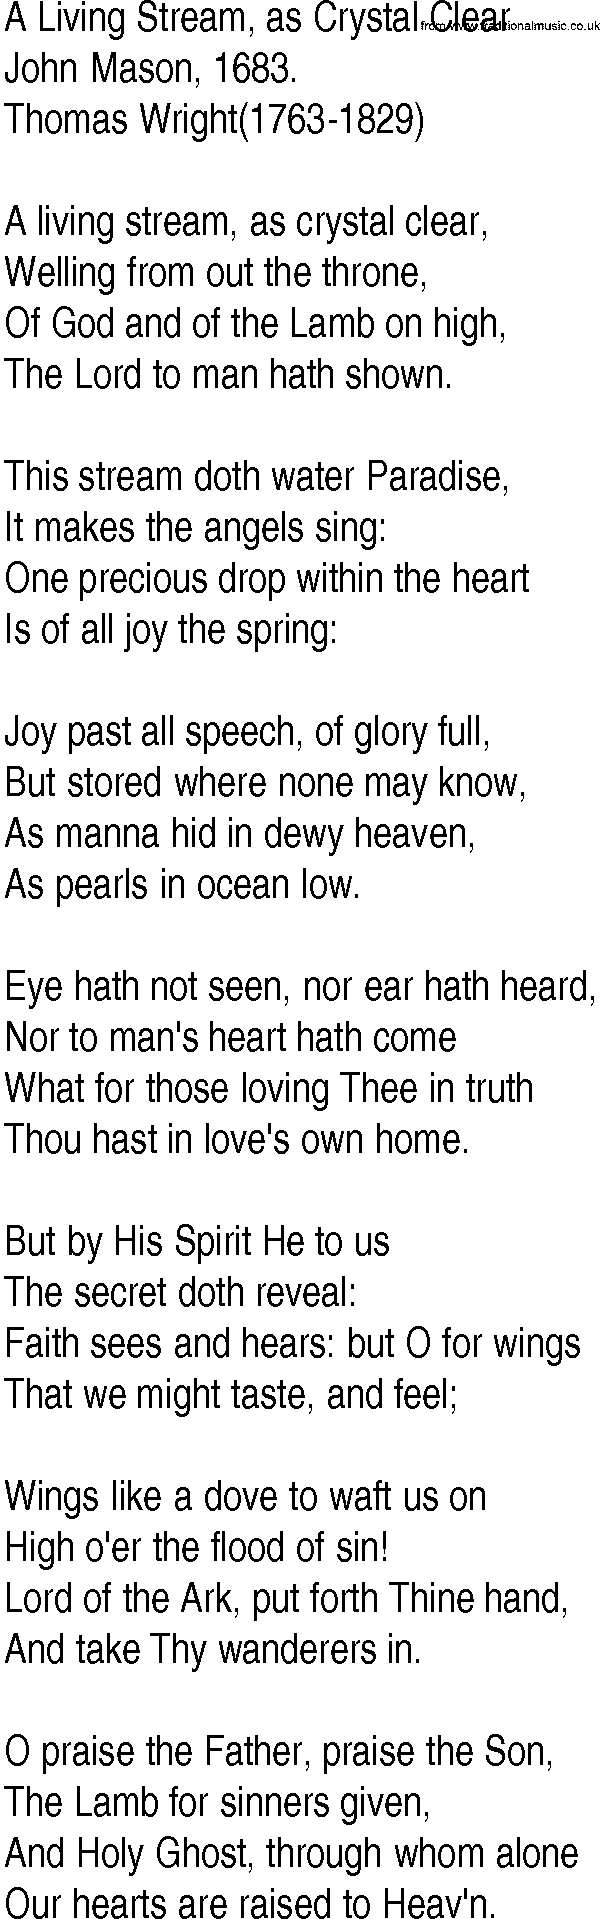 Hymn and Gospel Song: A Living Stream, as Crystal Clear by John Mason lyrics